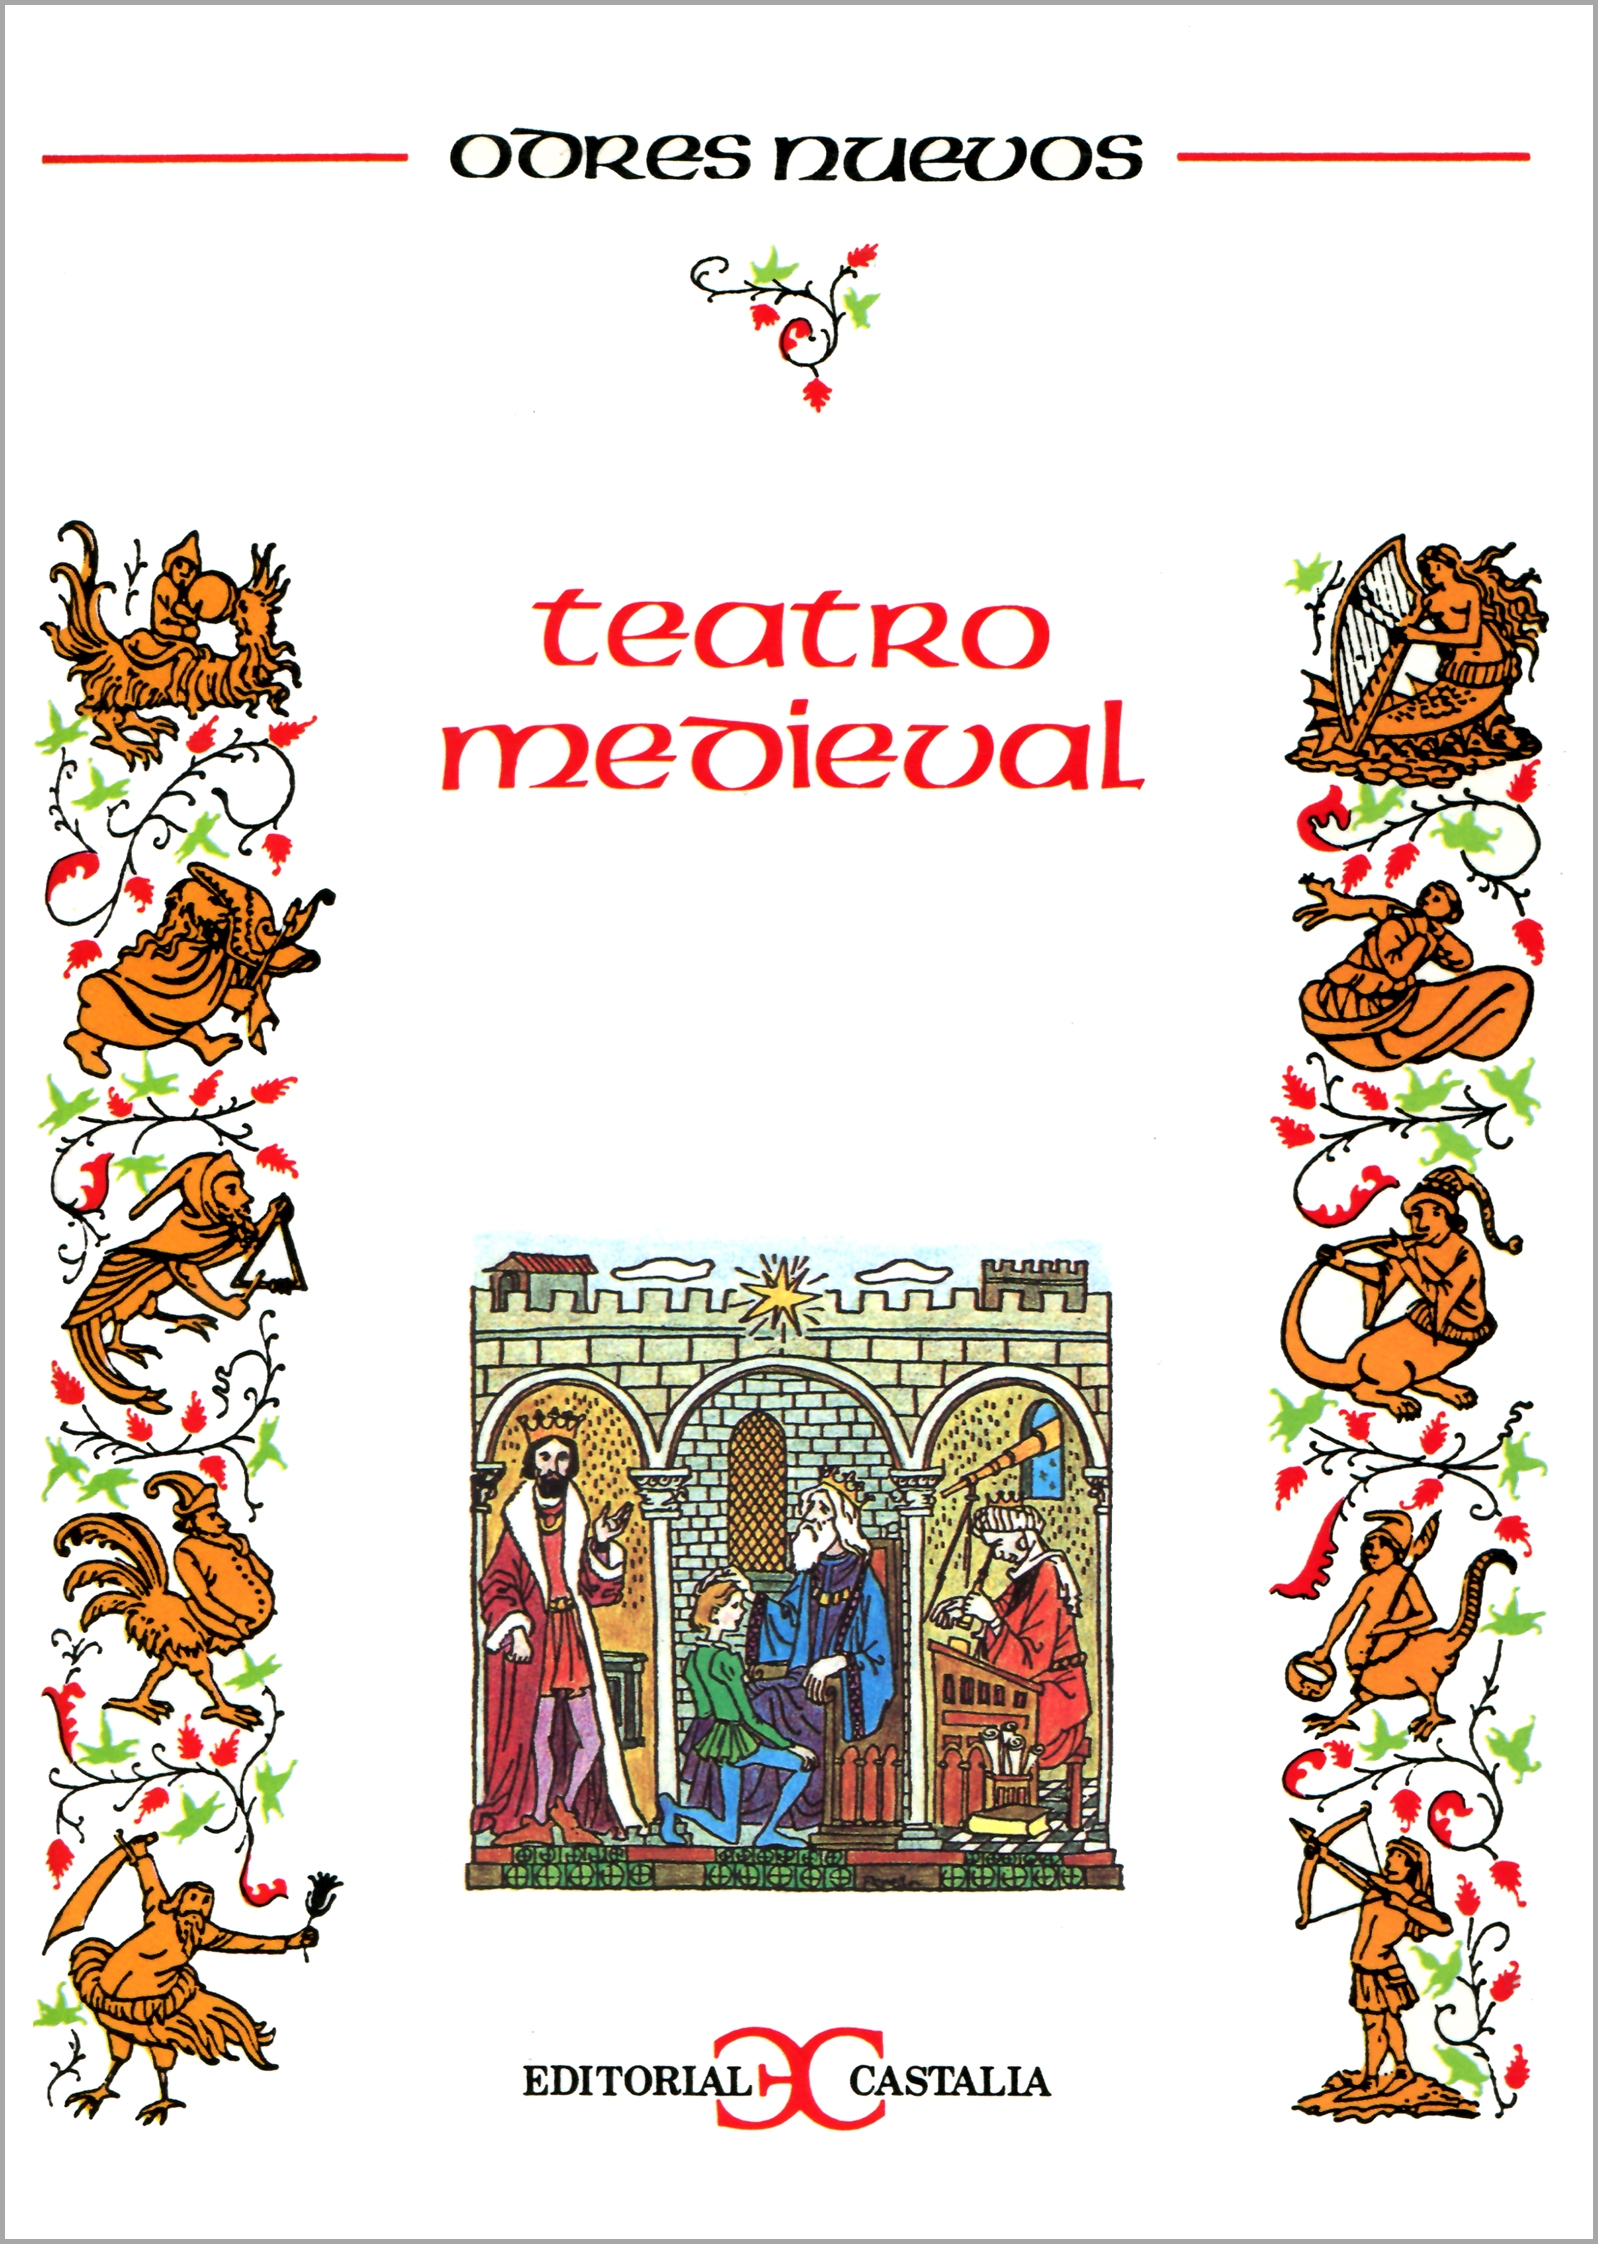 Teatro medieval